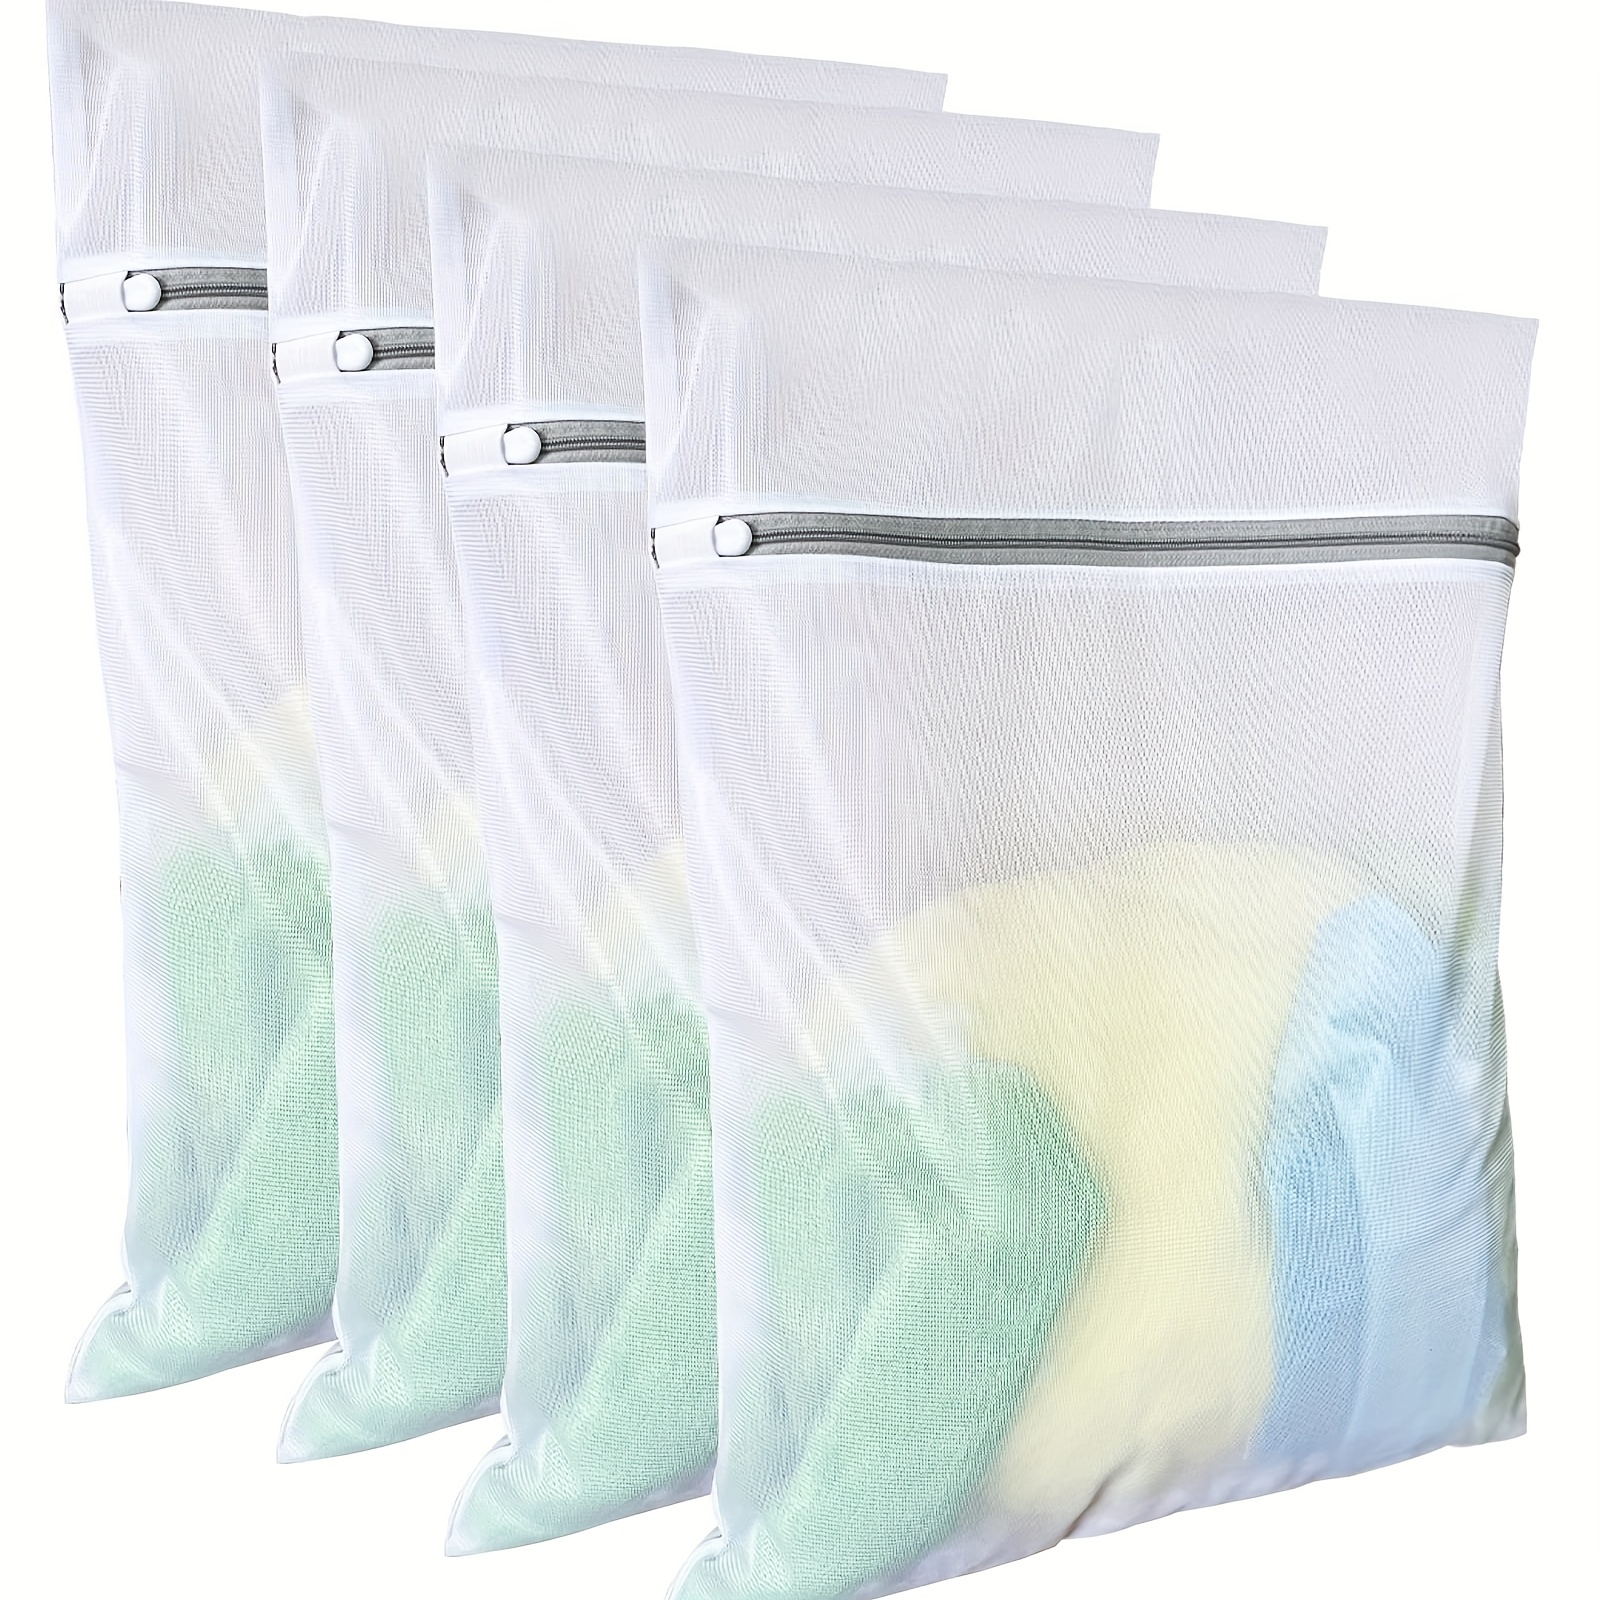 Mesh Laundry Bags With Premium Zipper Travel Storage Organize Bag